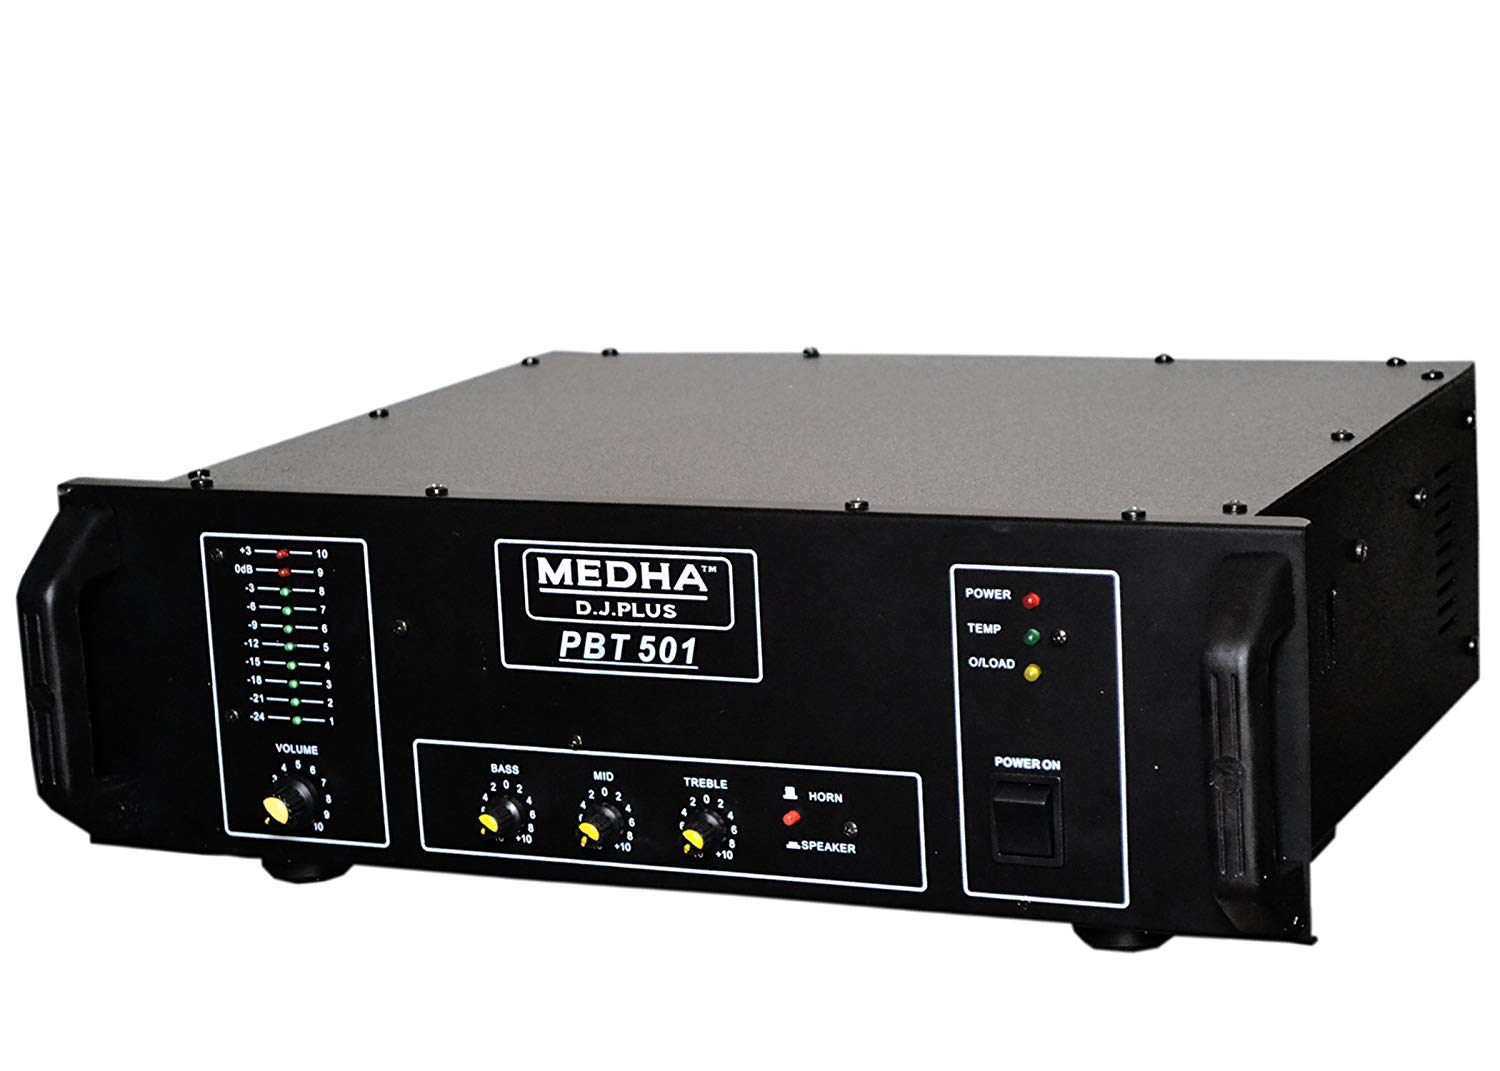 Plus Pbt-501 High Power Mosfet Amplifier And Controllers - 600 Watt Amplifier Price , HD Wallpaper & Backgrounds